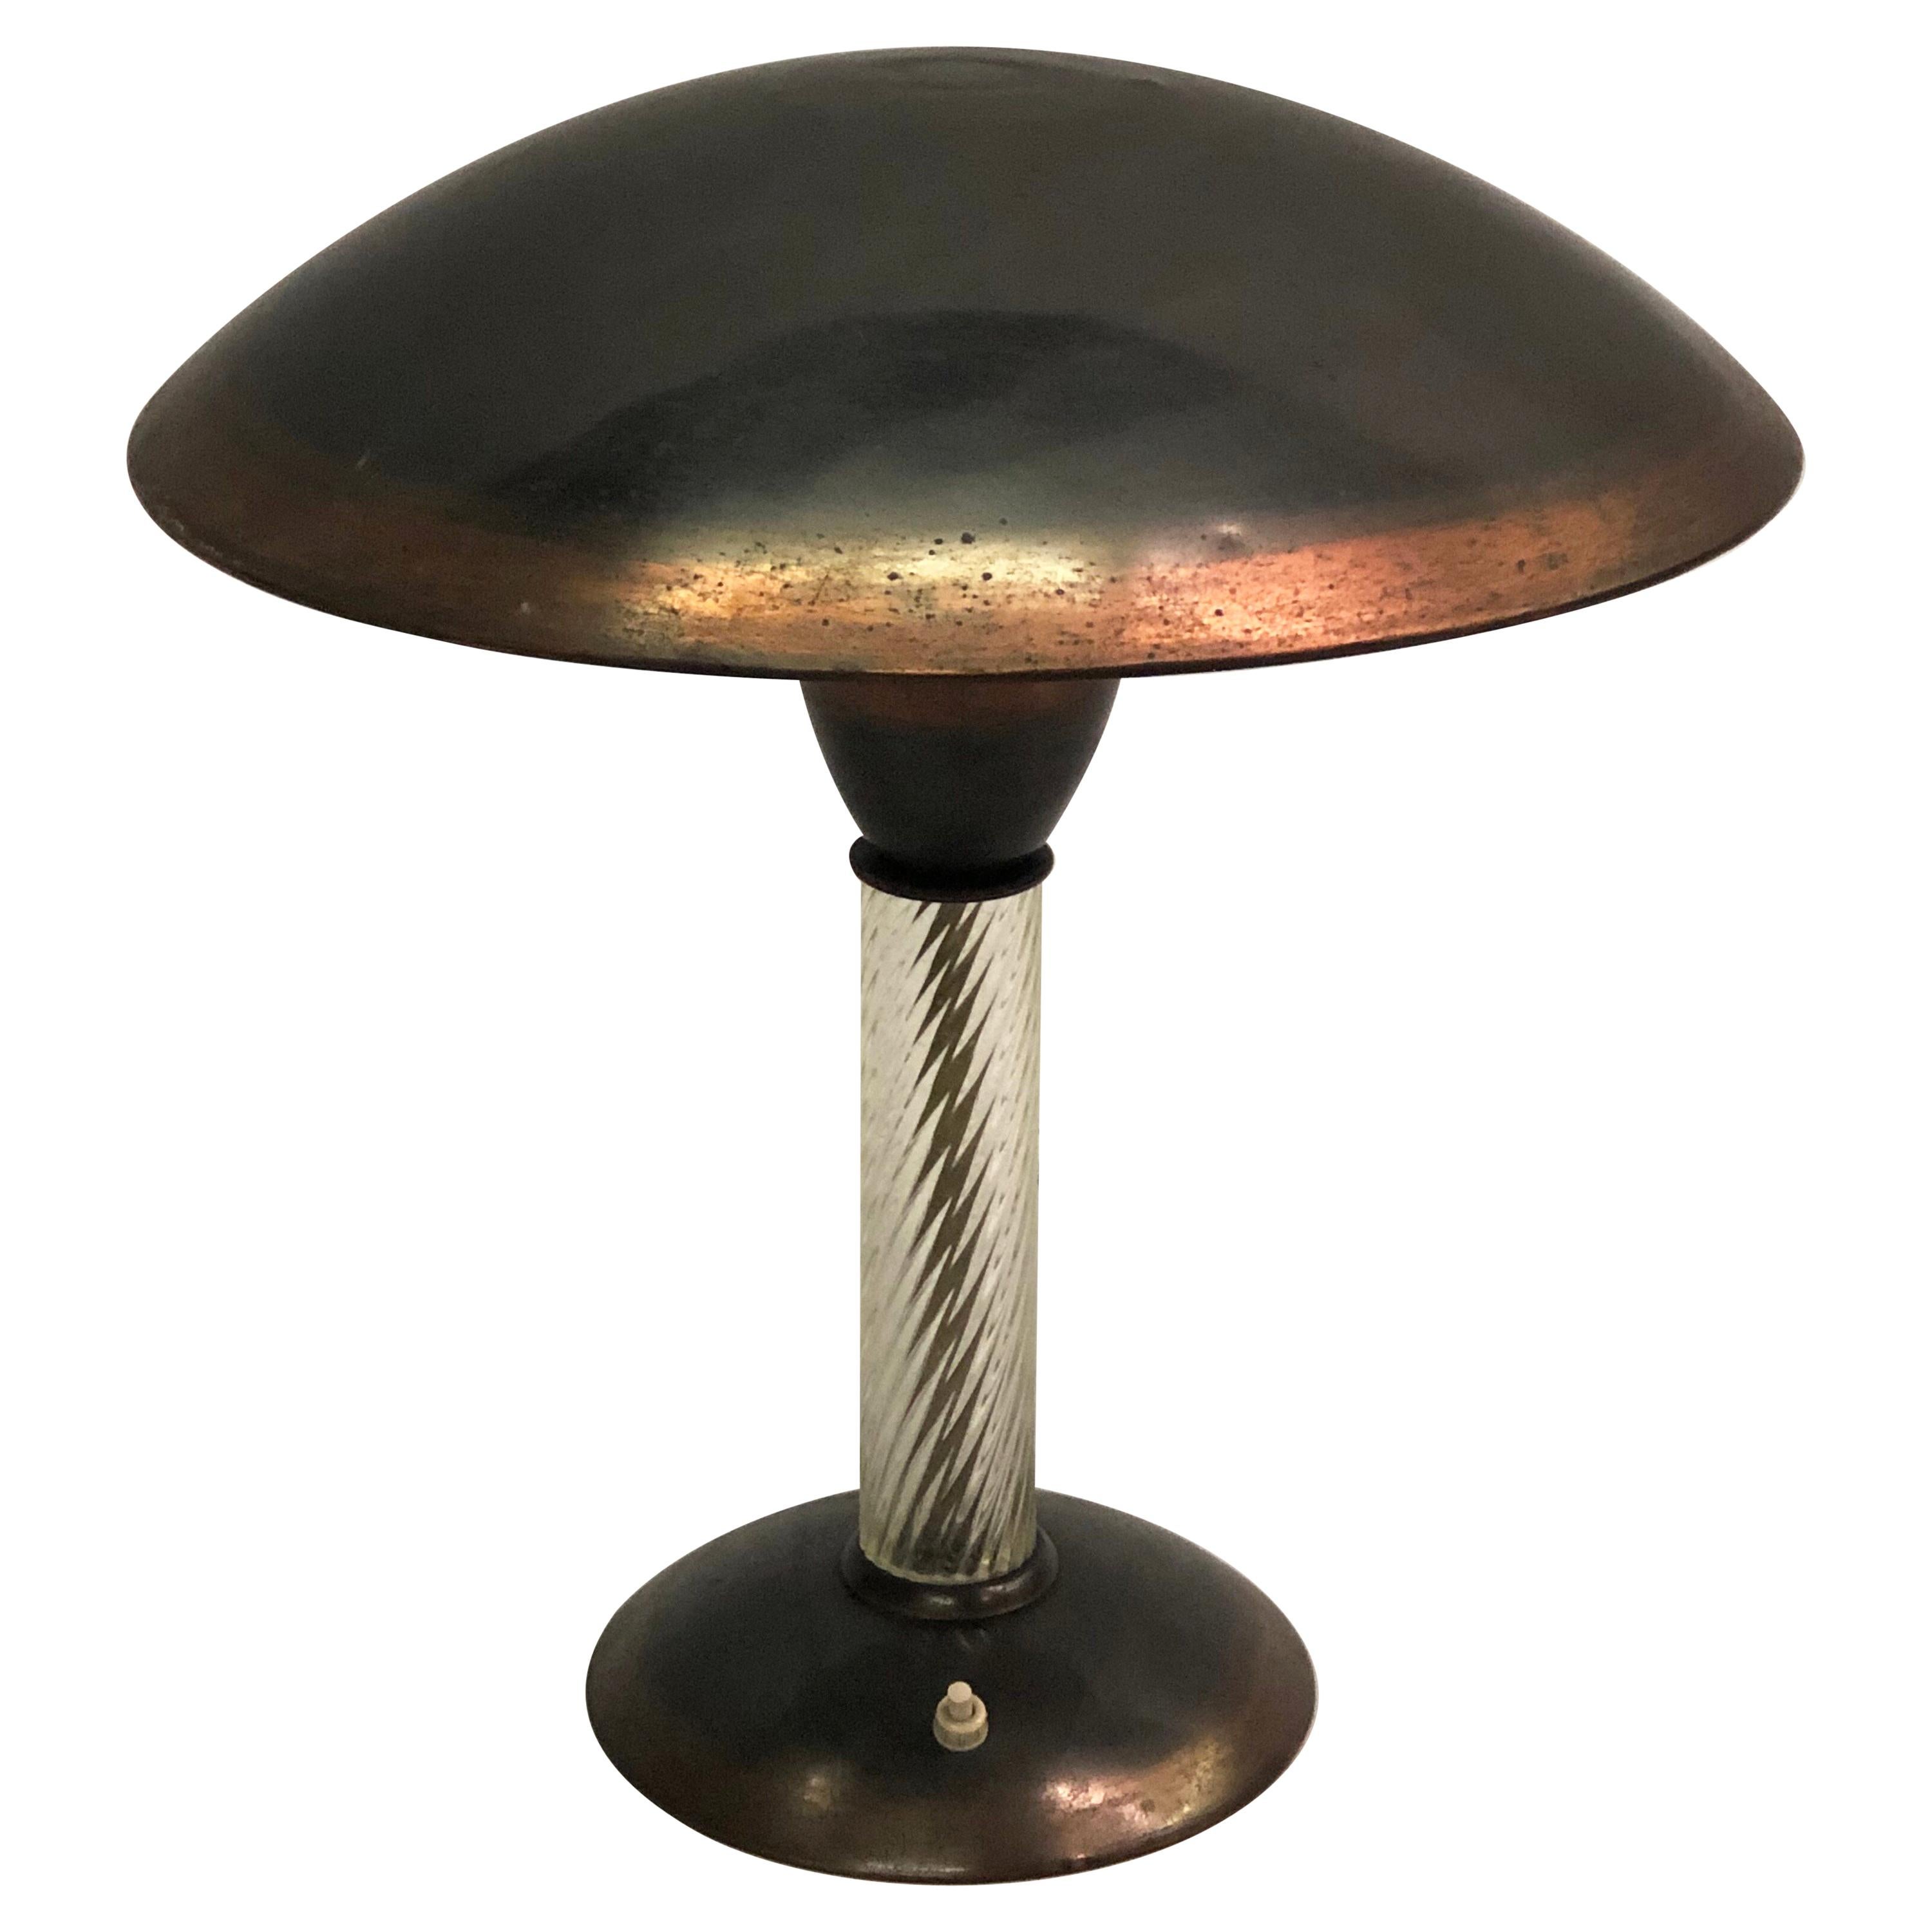 Italian Art Deco / Midcentury Modern Table / Desk Lamp by Siemens & Venini Glass For Sale